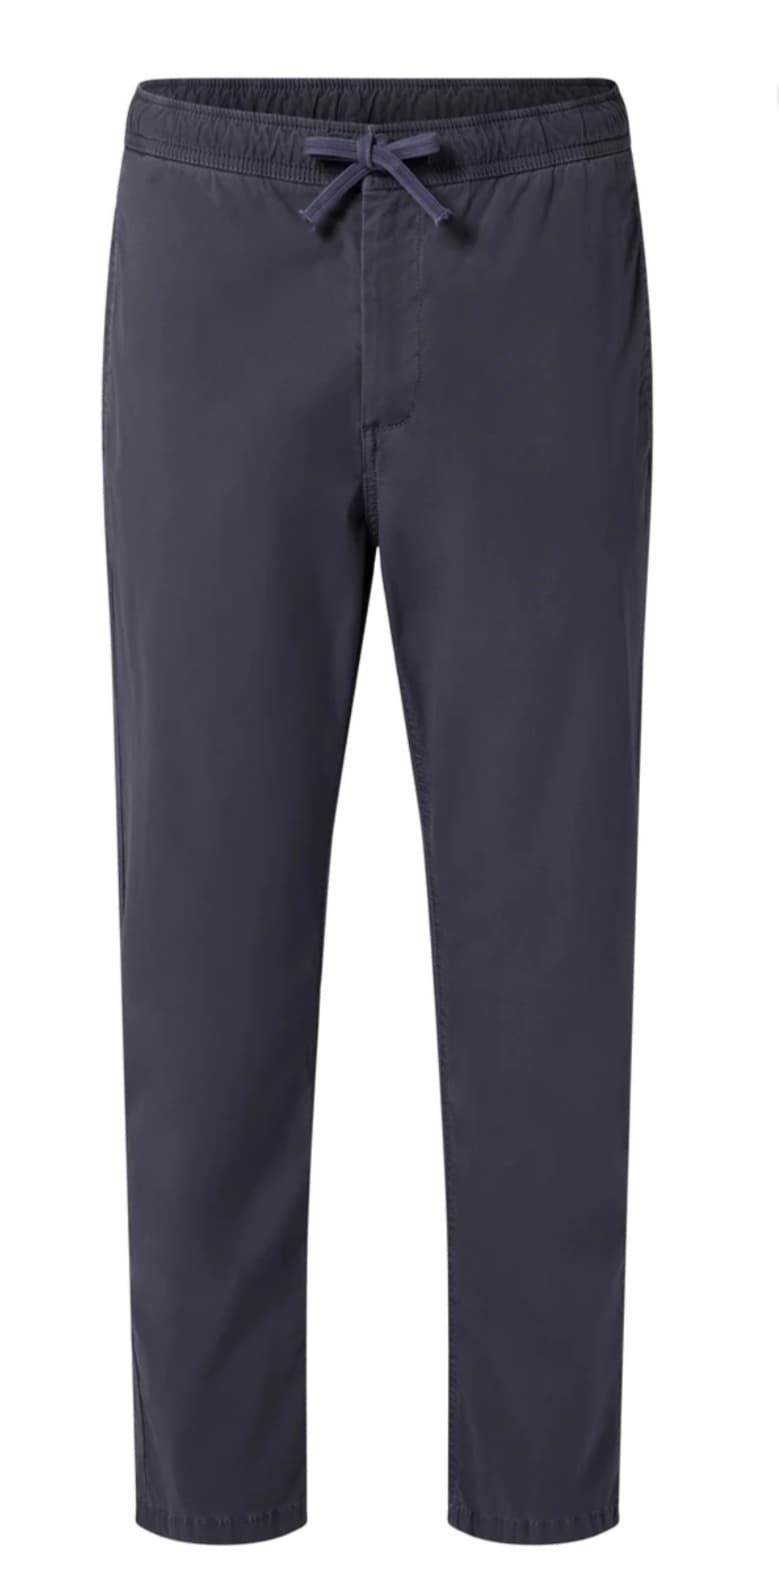 Pantalón con goma y cordón de hombre ECOALF - Imagen 4